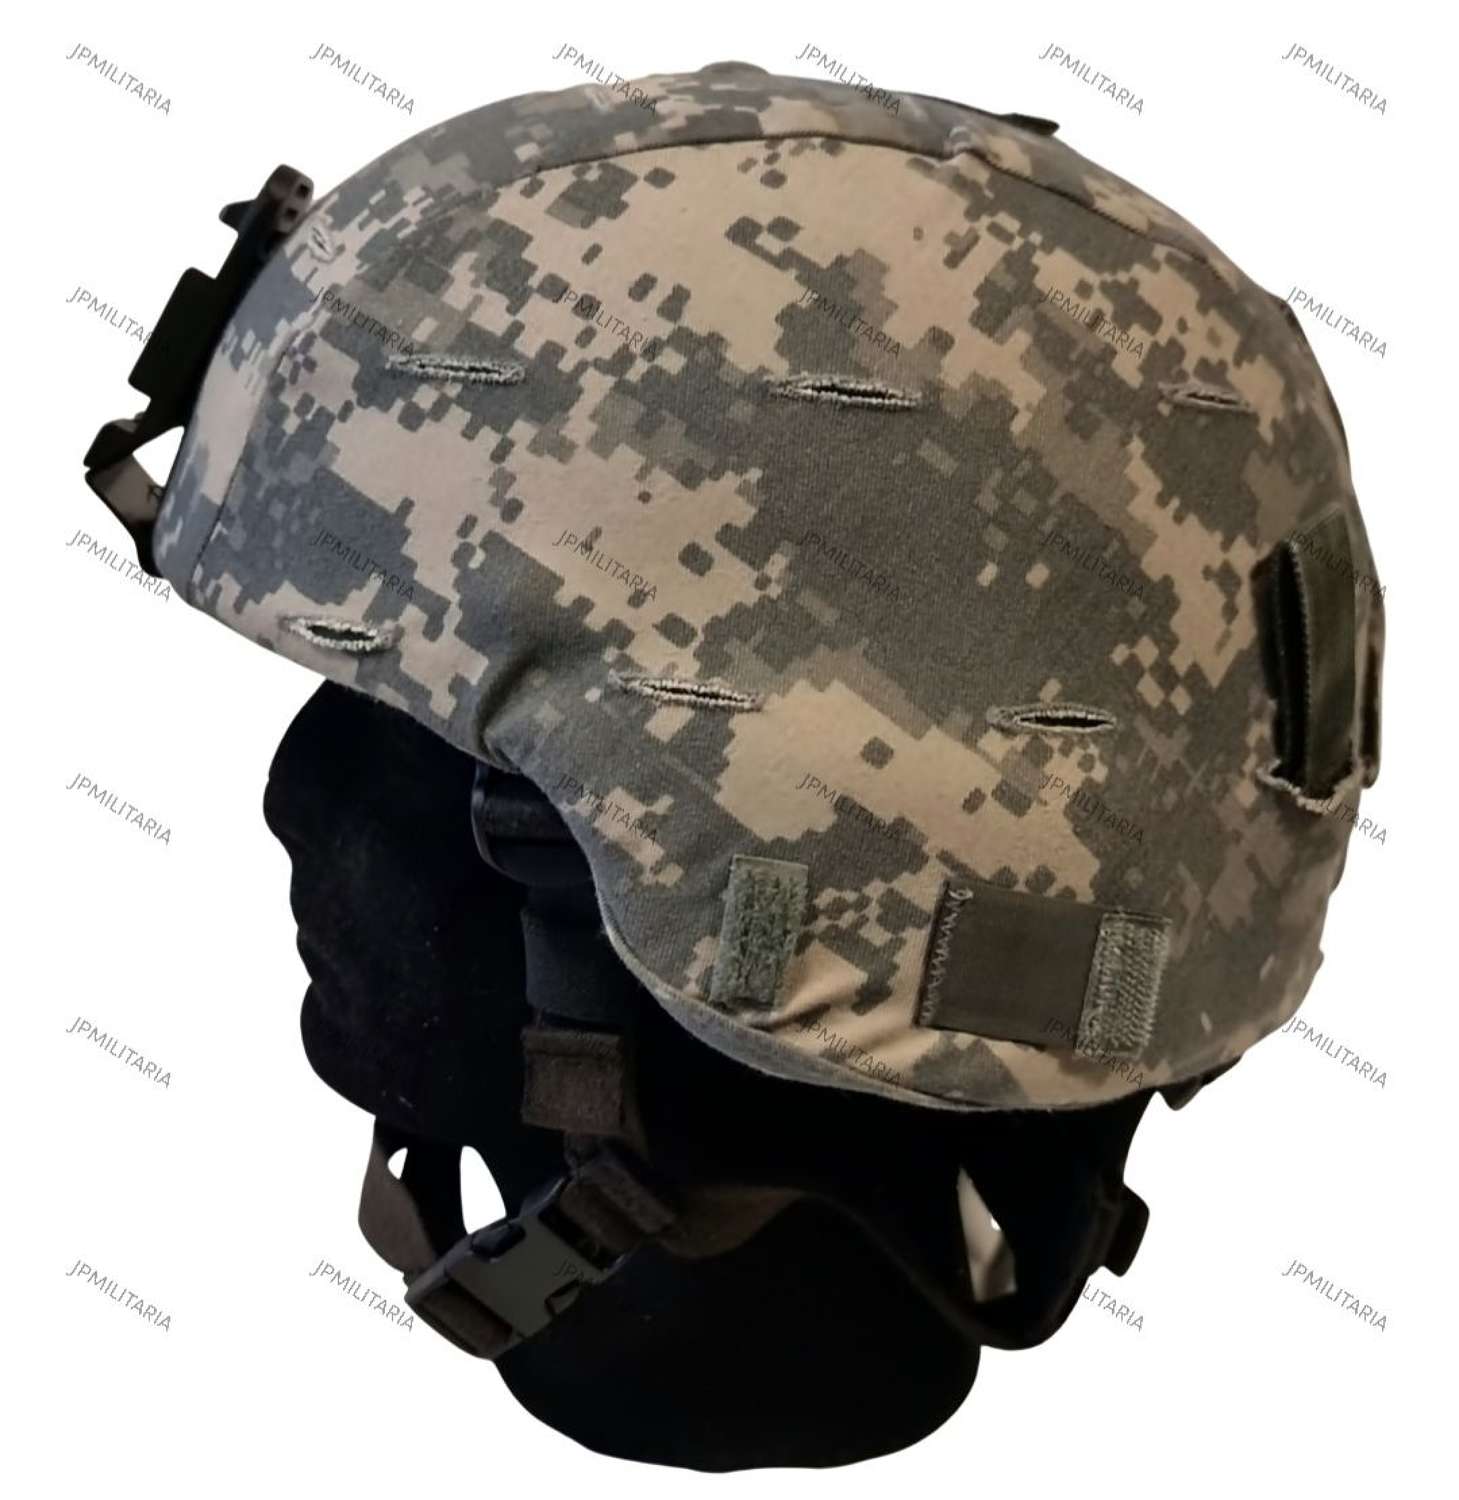 U.S Advanced combat helmet